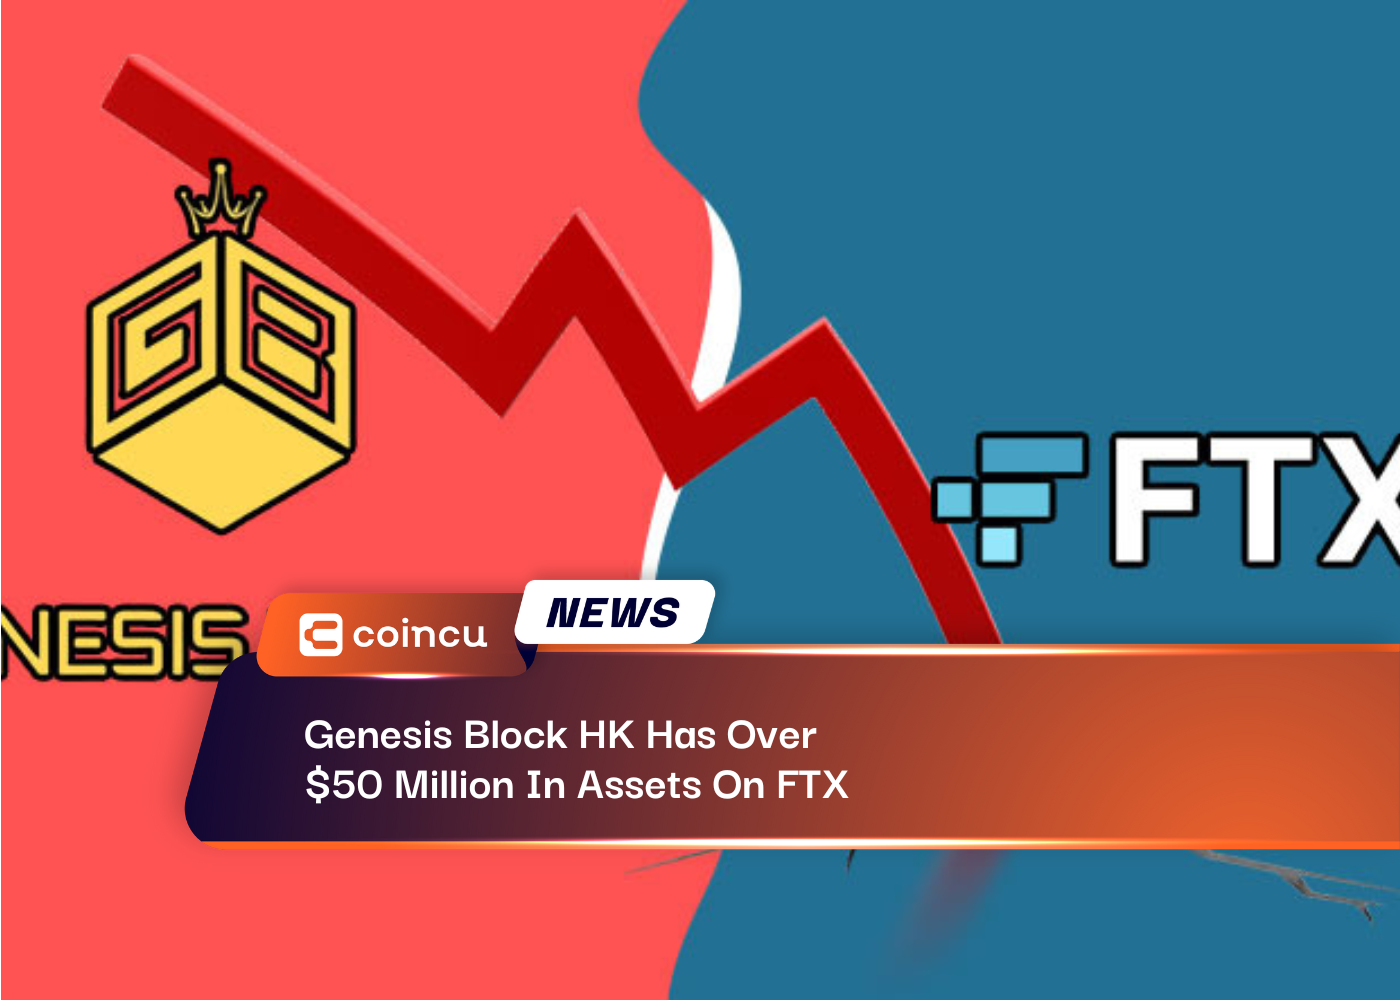 Genesis Block HK Has Over $50 Million In Assets On FTX